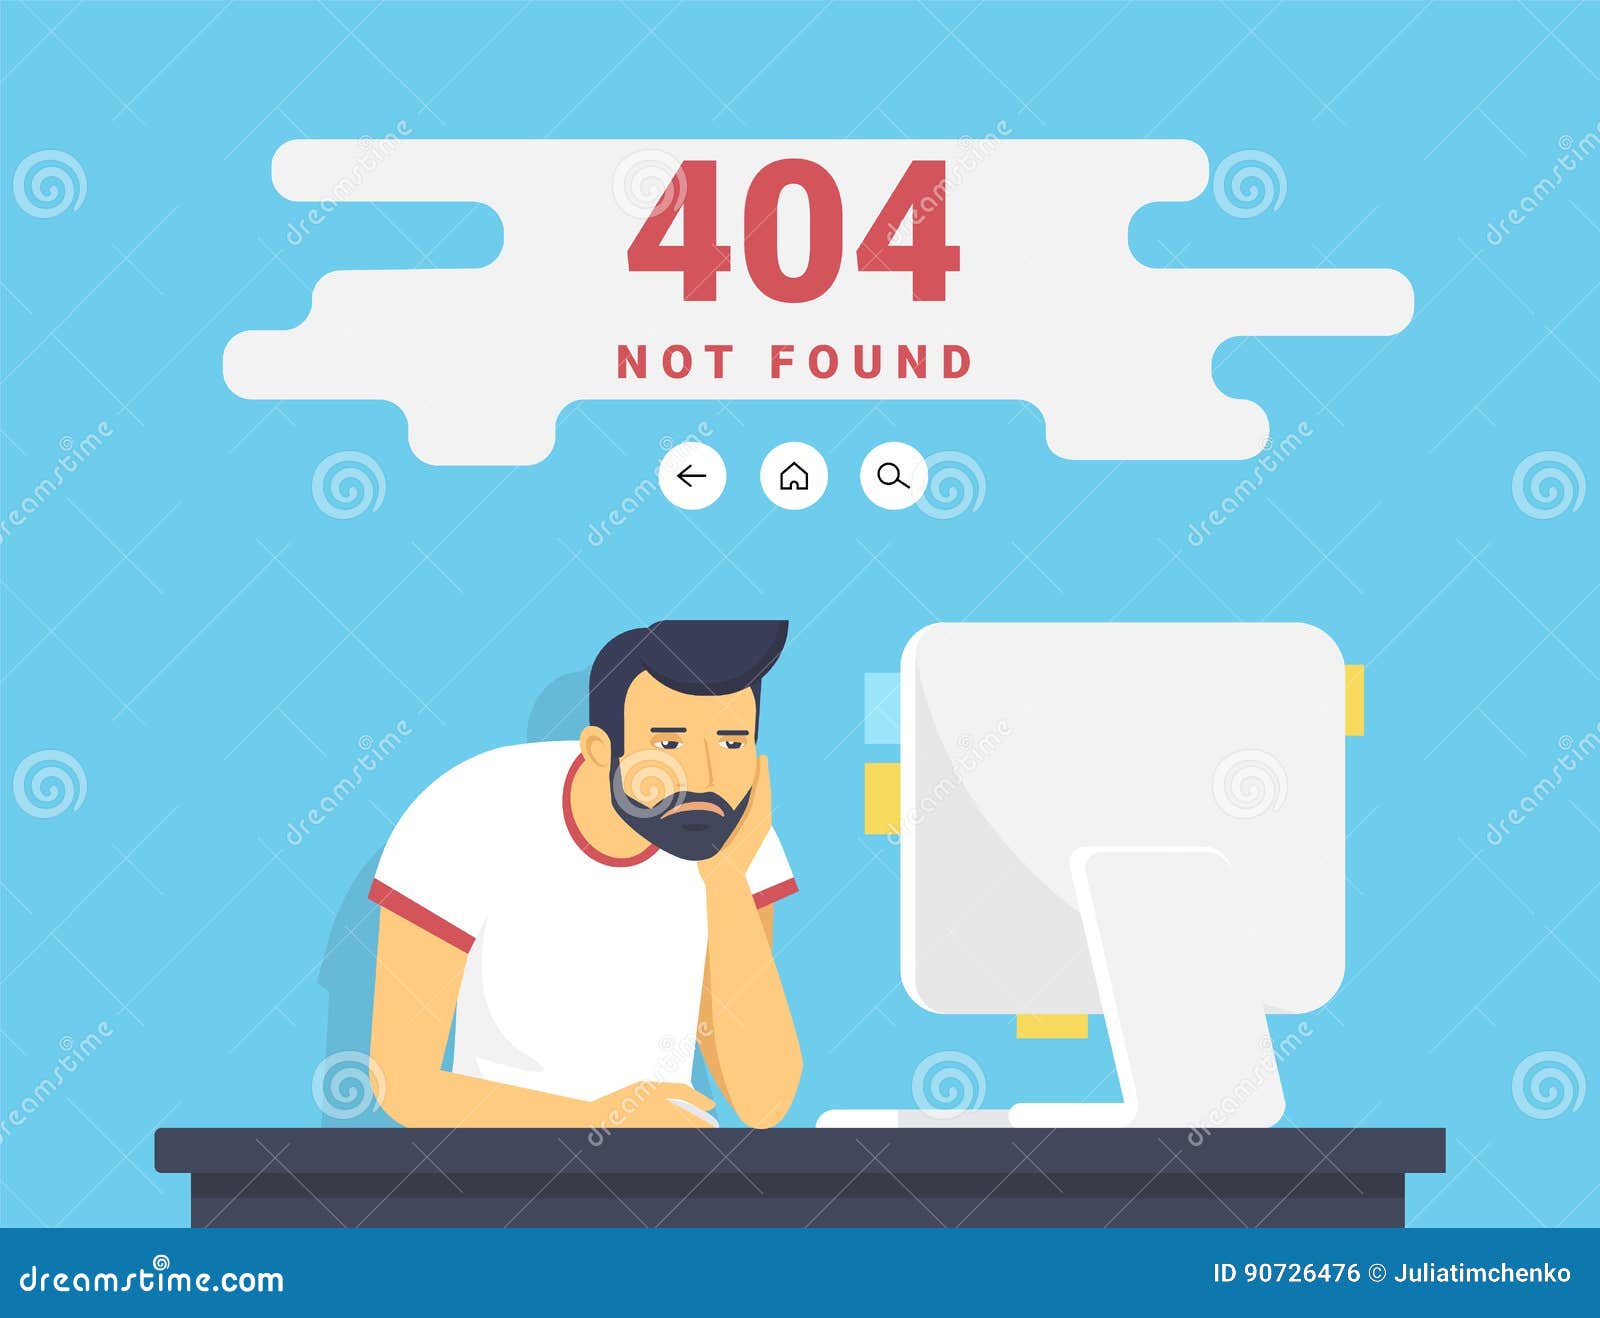 Website Not Working Stock Illustrations – 210 Website Not Working Stock ...